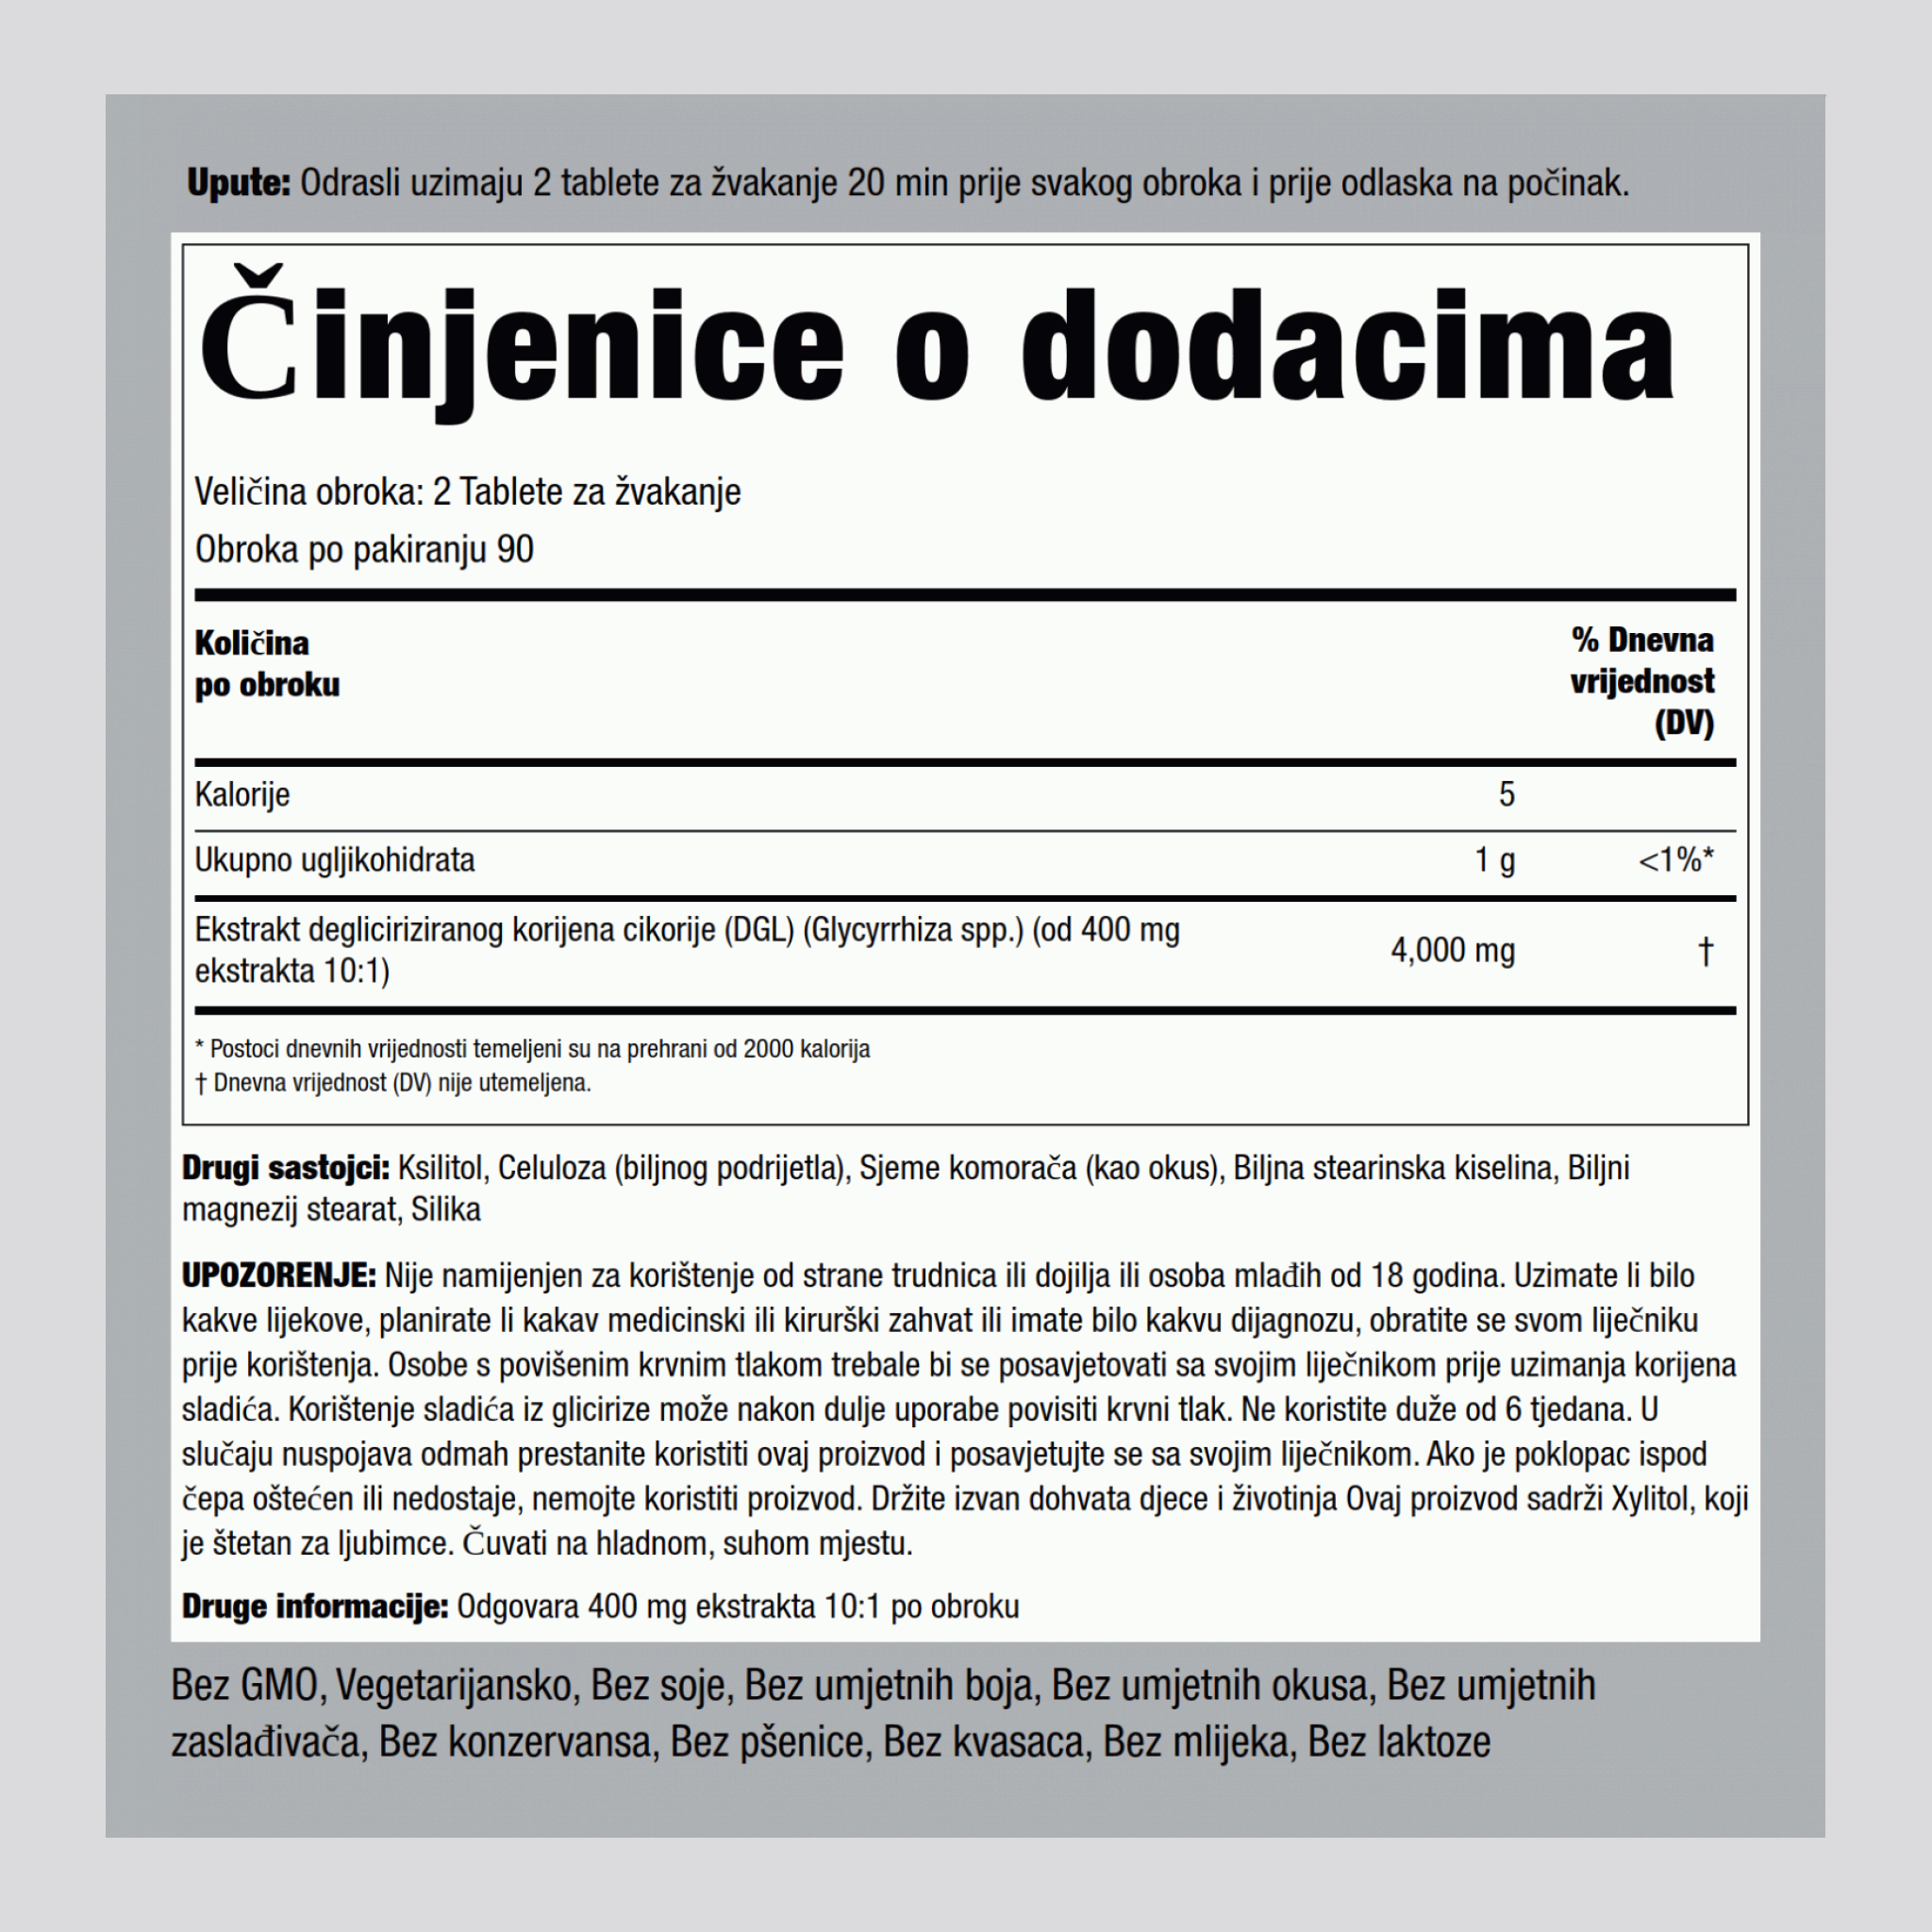 DGL Licorice Root Chewable Mega Potency (Deglycyrrhizinated), 4000 mg (per serving), 180 Chewable Tablets, 2  Bottles